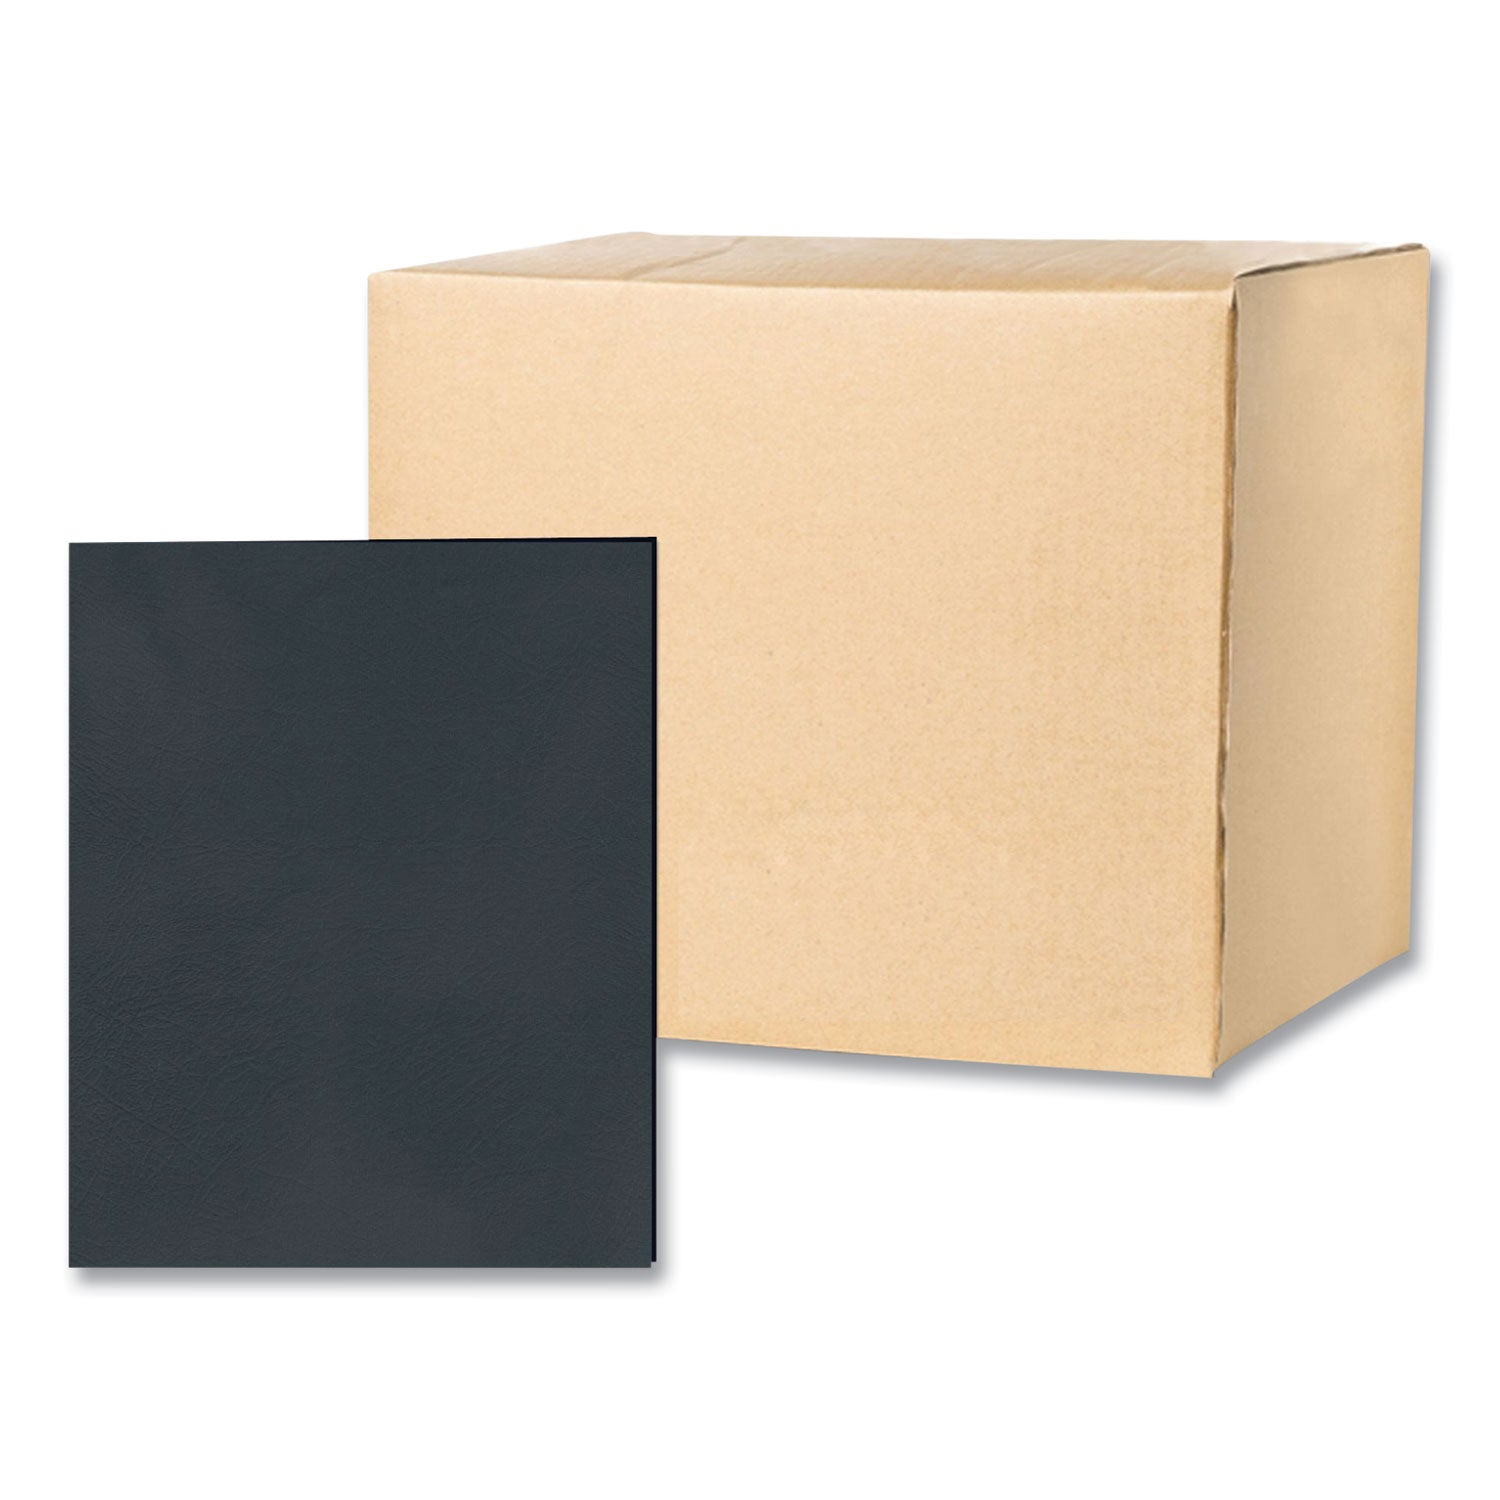 pocket-folder-05-capacity-11-x-85-black-25-box-10-boxes-carton-ships-in-4-6-business-days_roa50119cs - 1